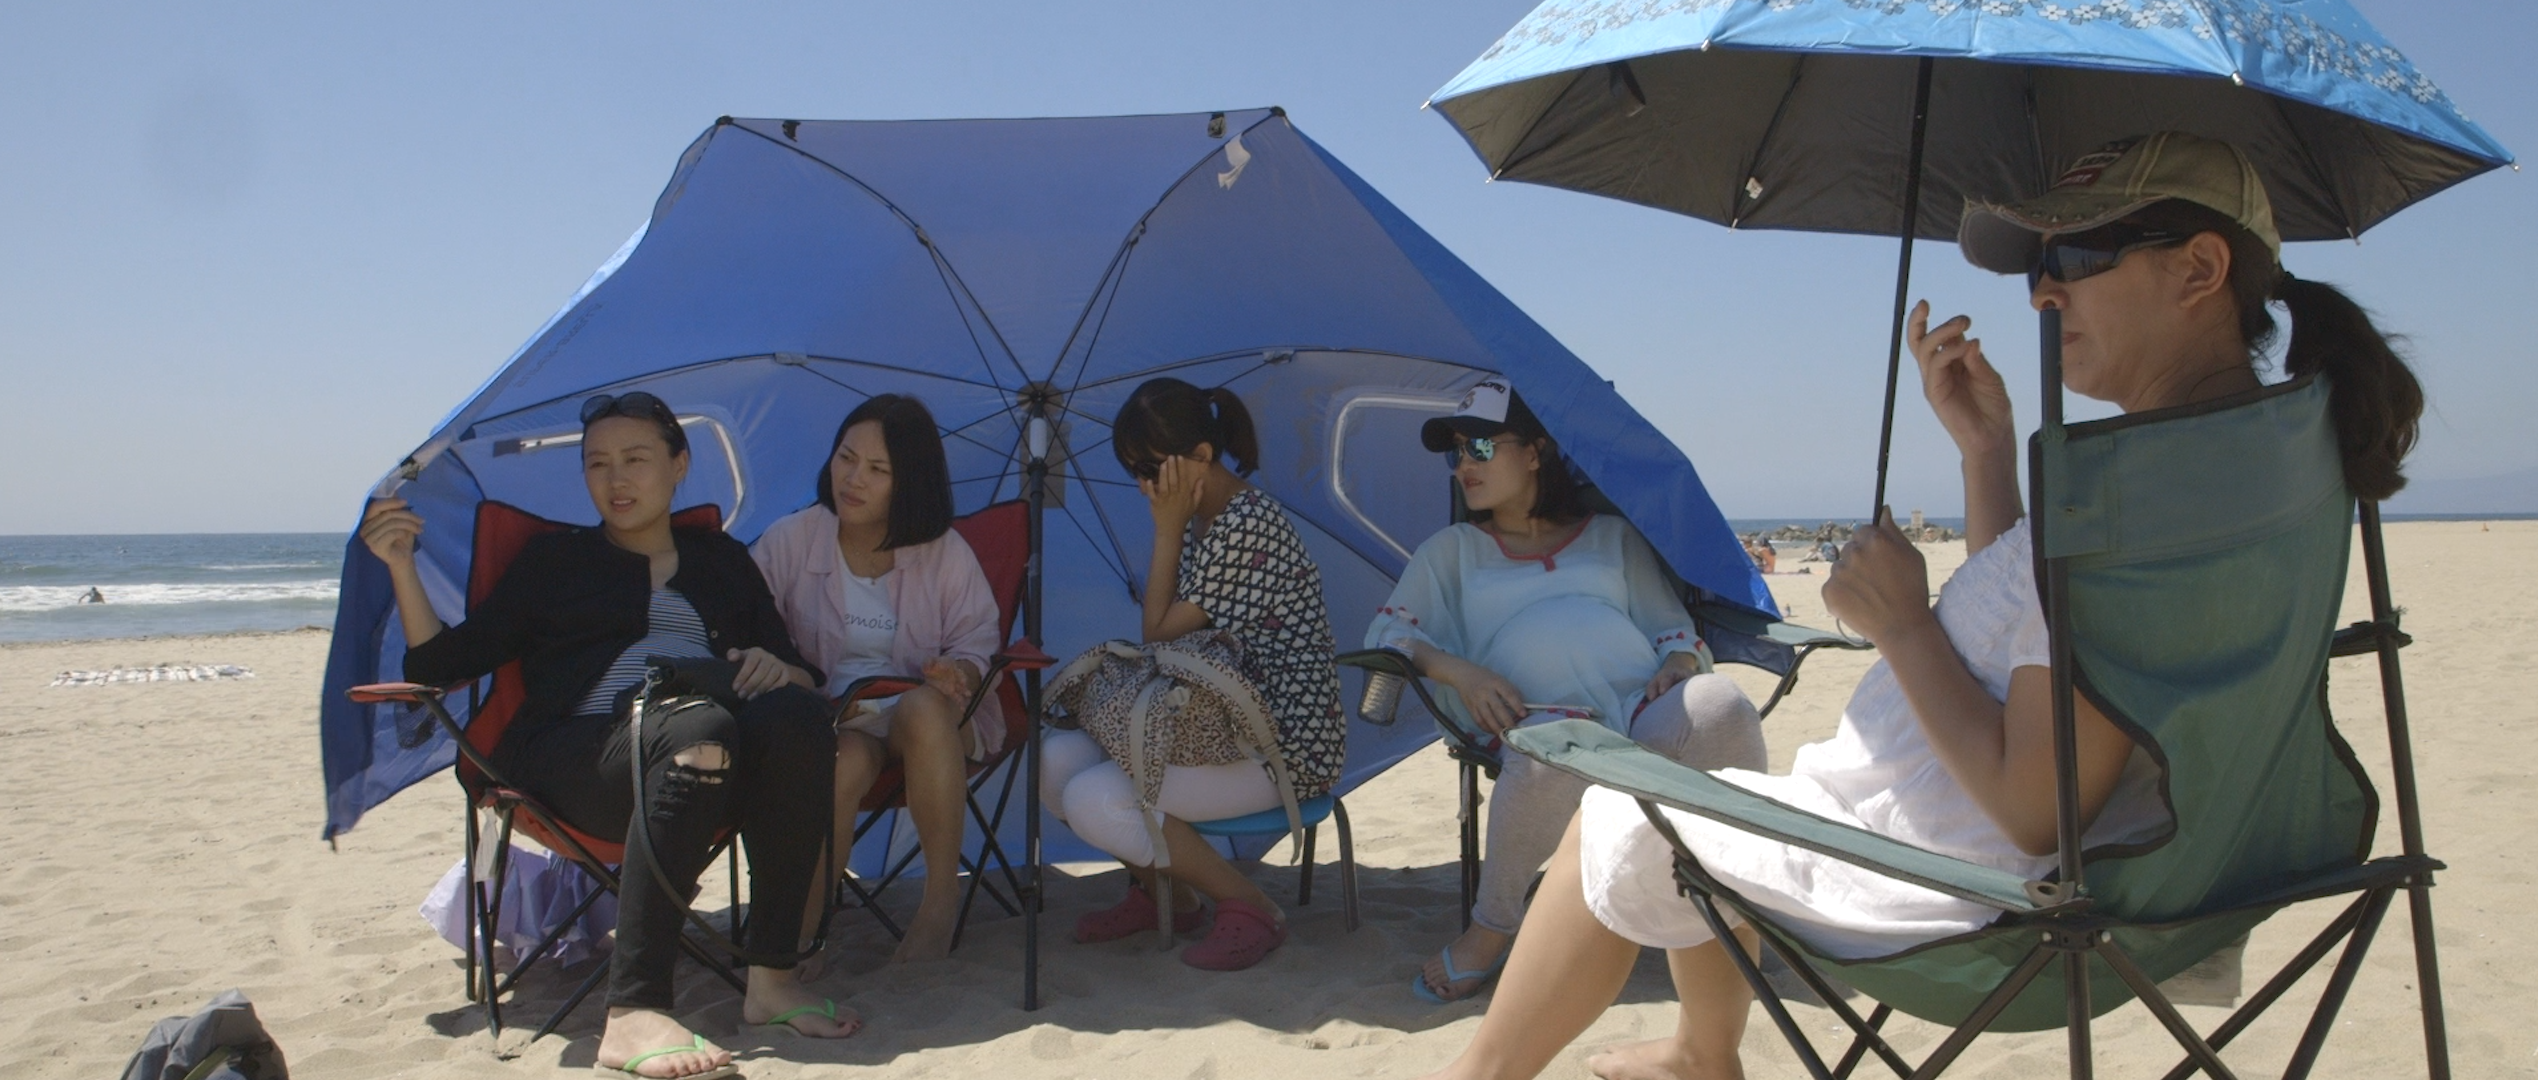 Five women sit under umbrellas in the sun on a beach.